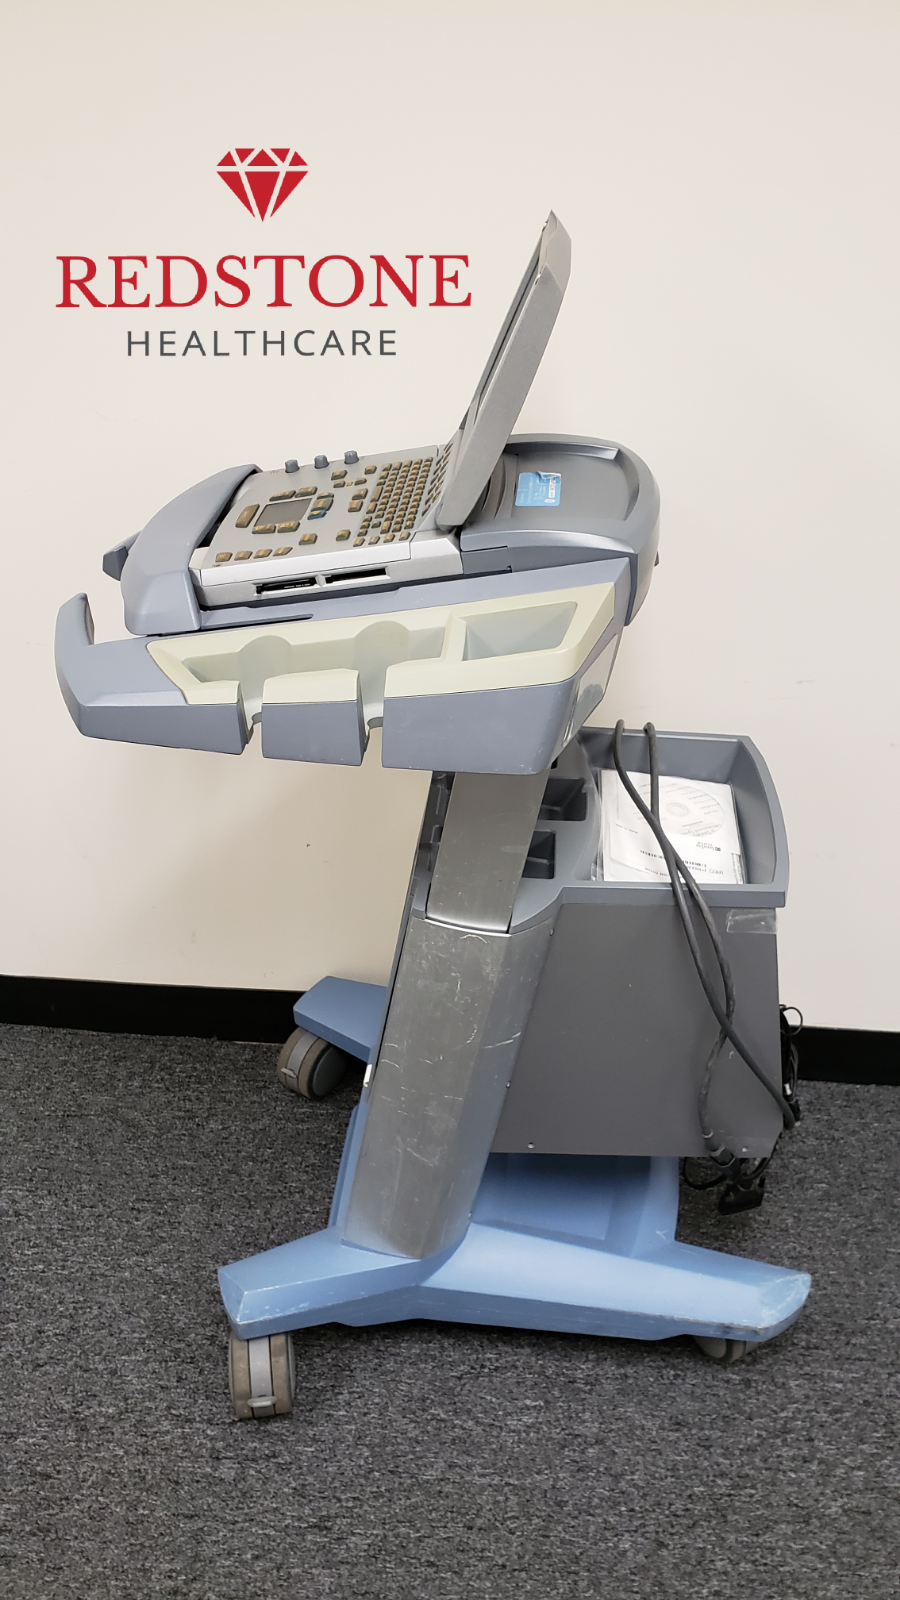 Sonosite Titan Ultrasound System DIAGNOSTIC ULTRASOUND MACHINES FOR SALE